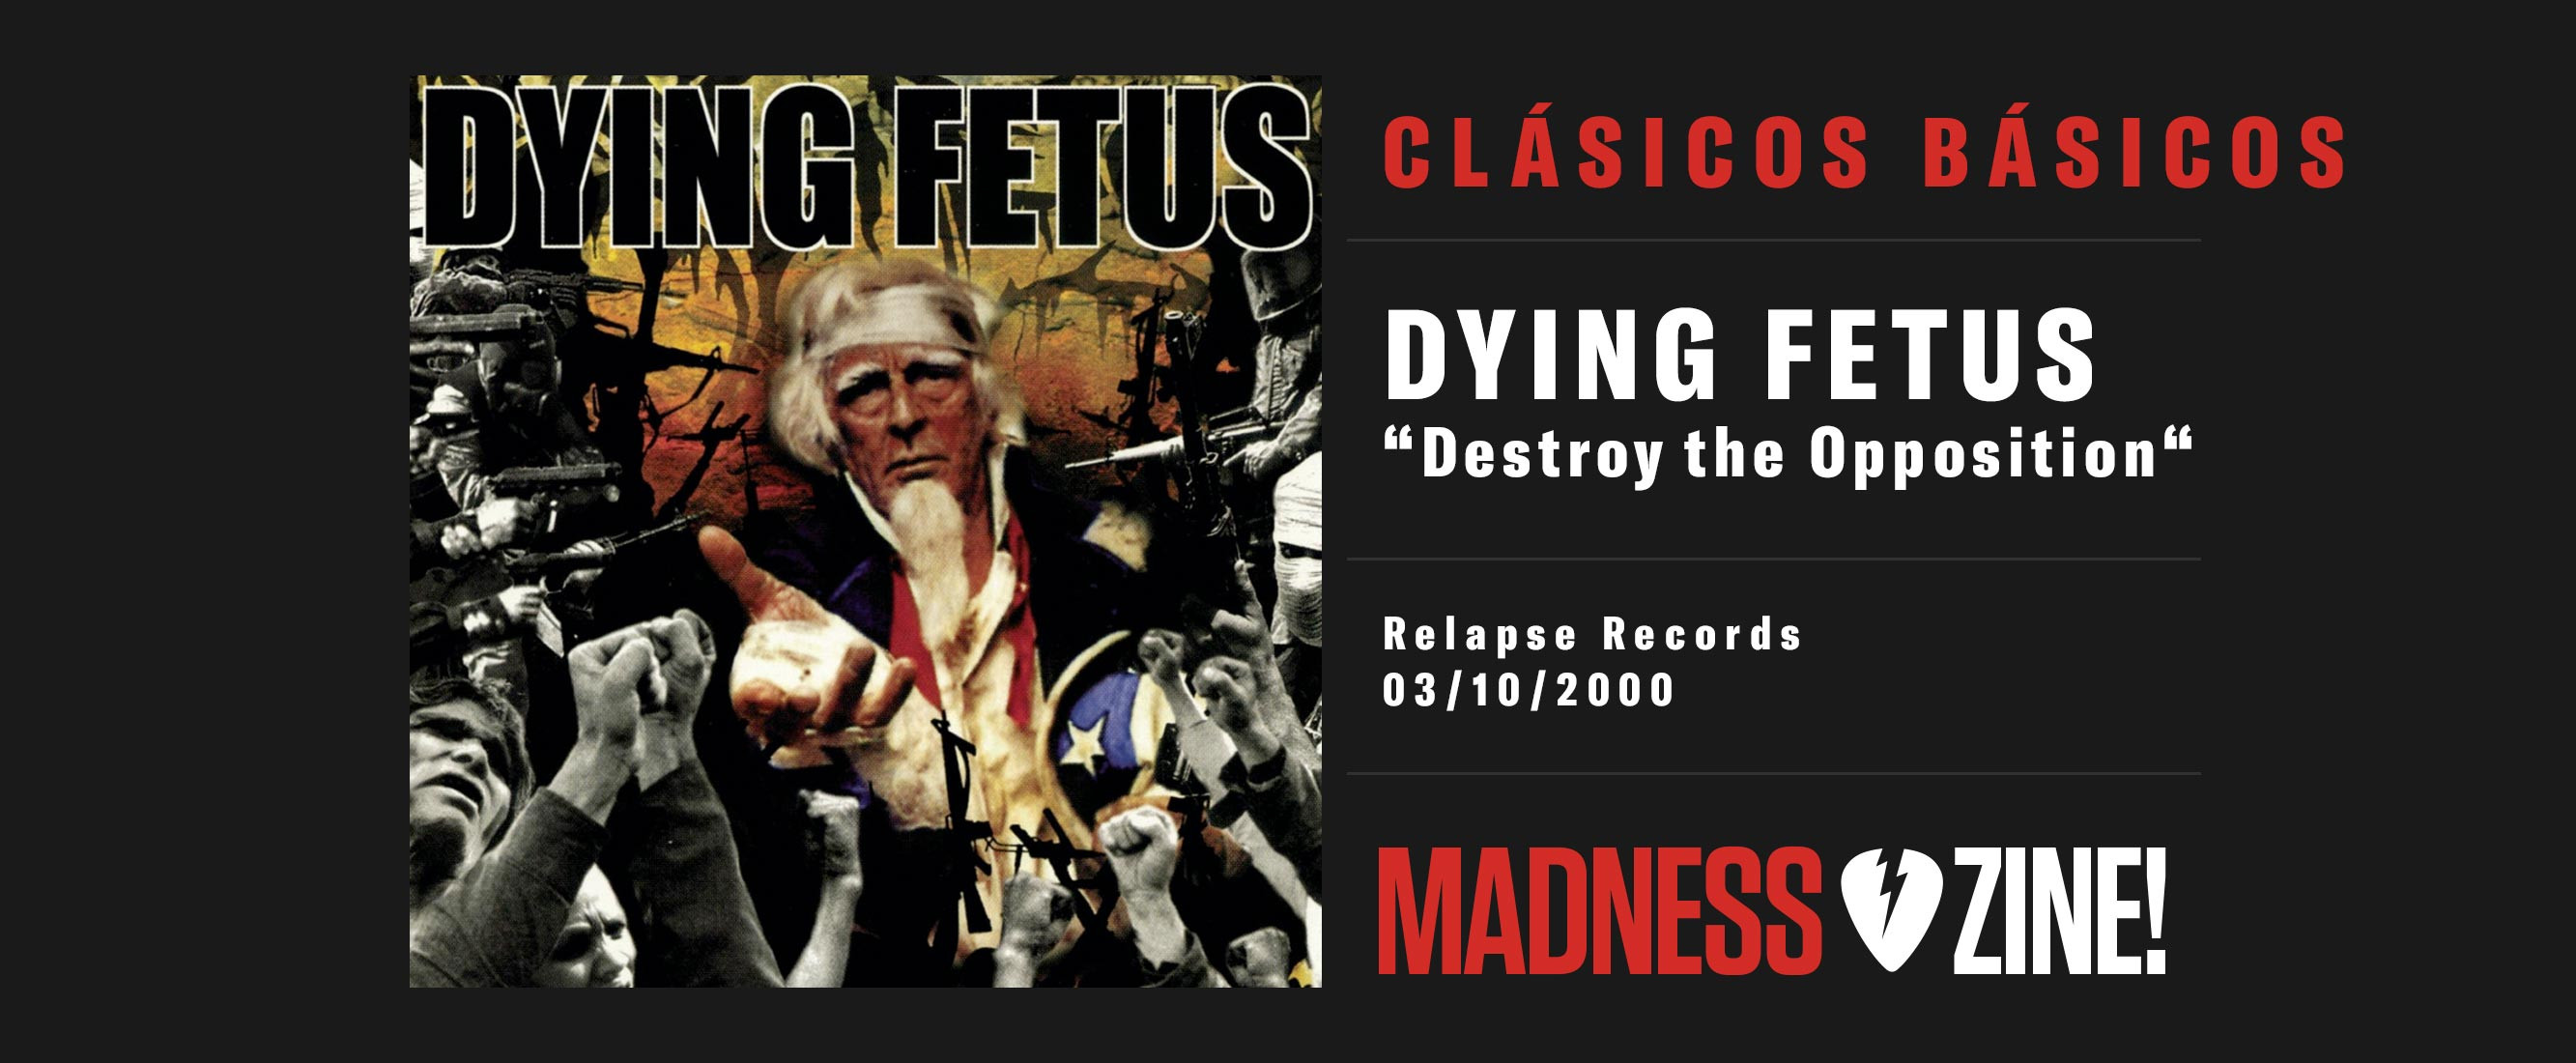 Clásicos Básicos: Dying Fetus 'Destroy the Opposition'